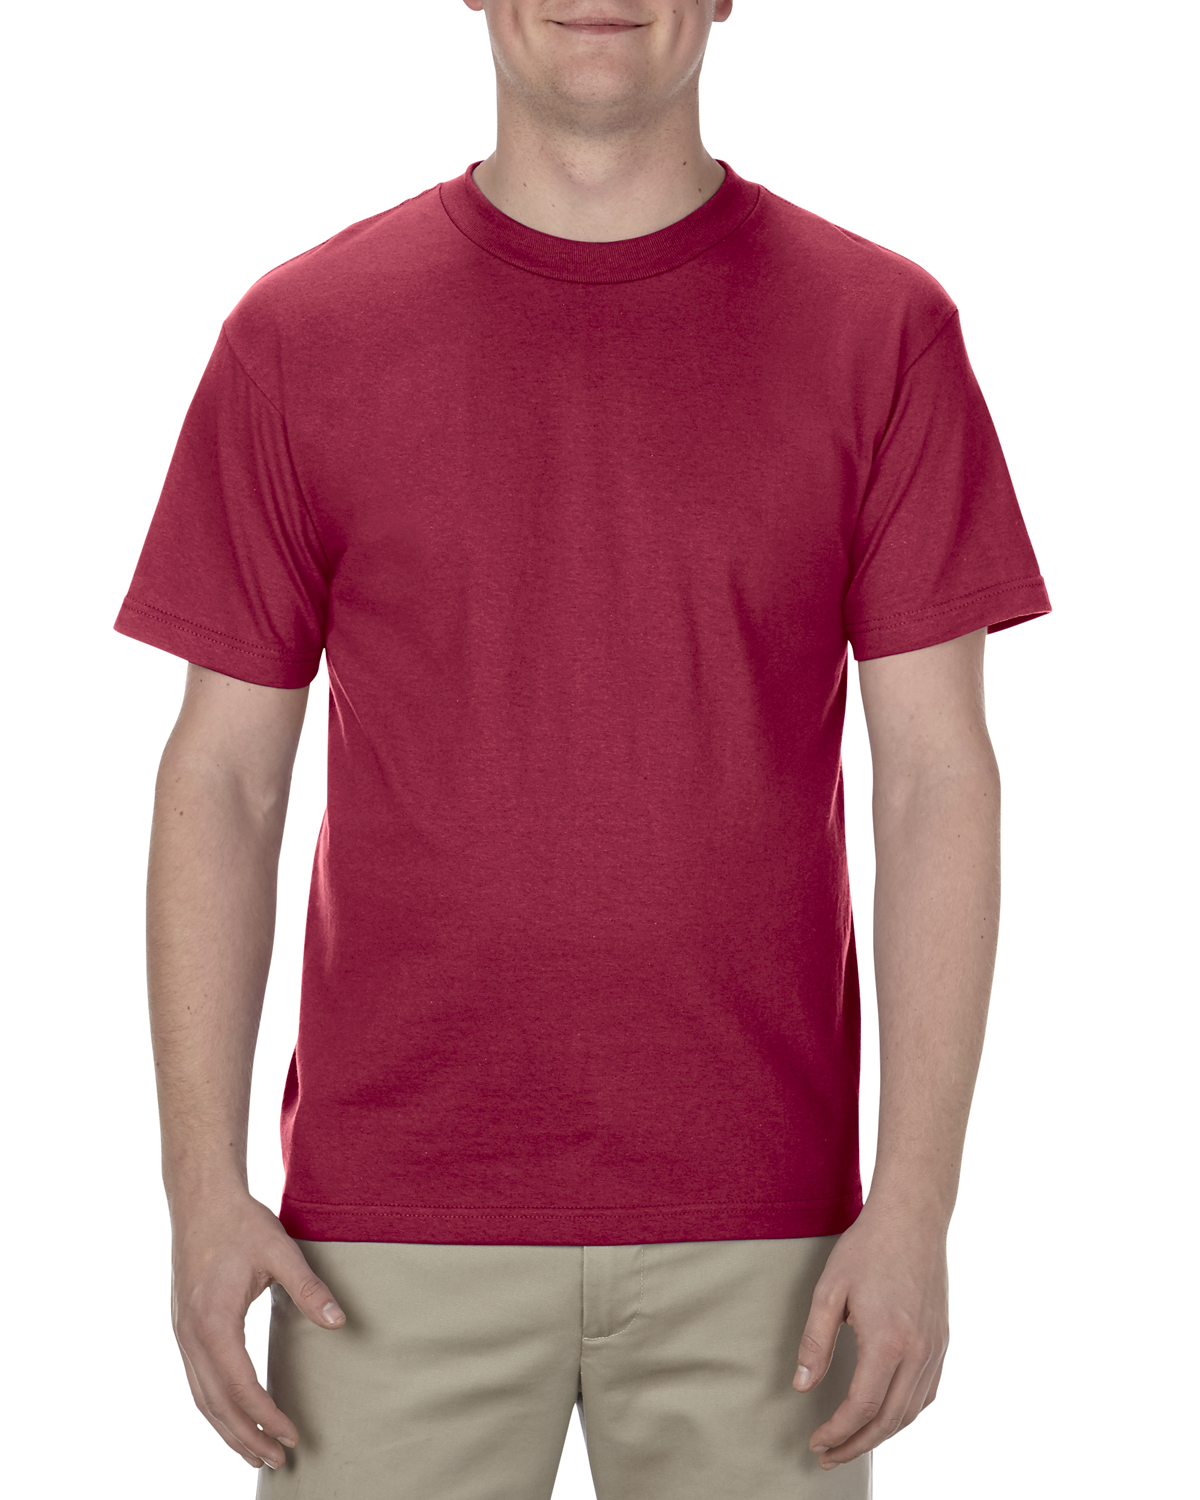 ALSTYLE AL1301 Mens Short Sleeve Cotton Crew Neck Stylish T-Shirt